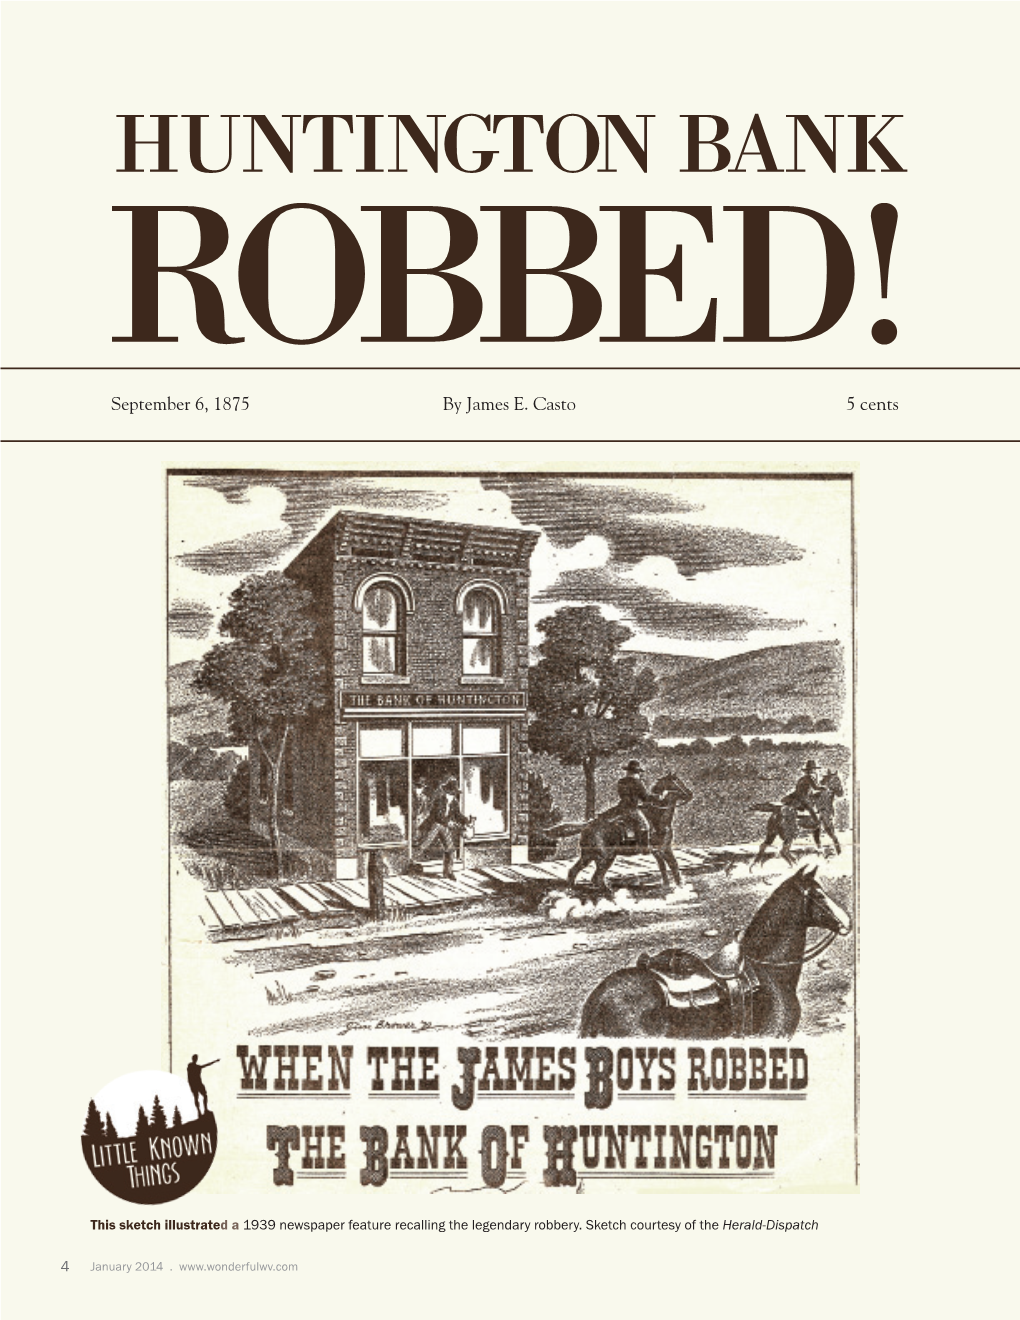 HUNTINGTON BANK ROBBED! September 6, 1875 by James E